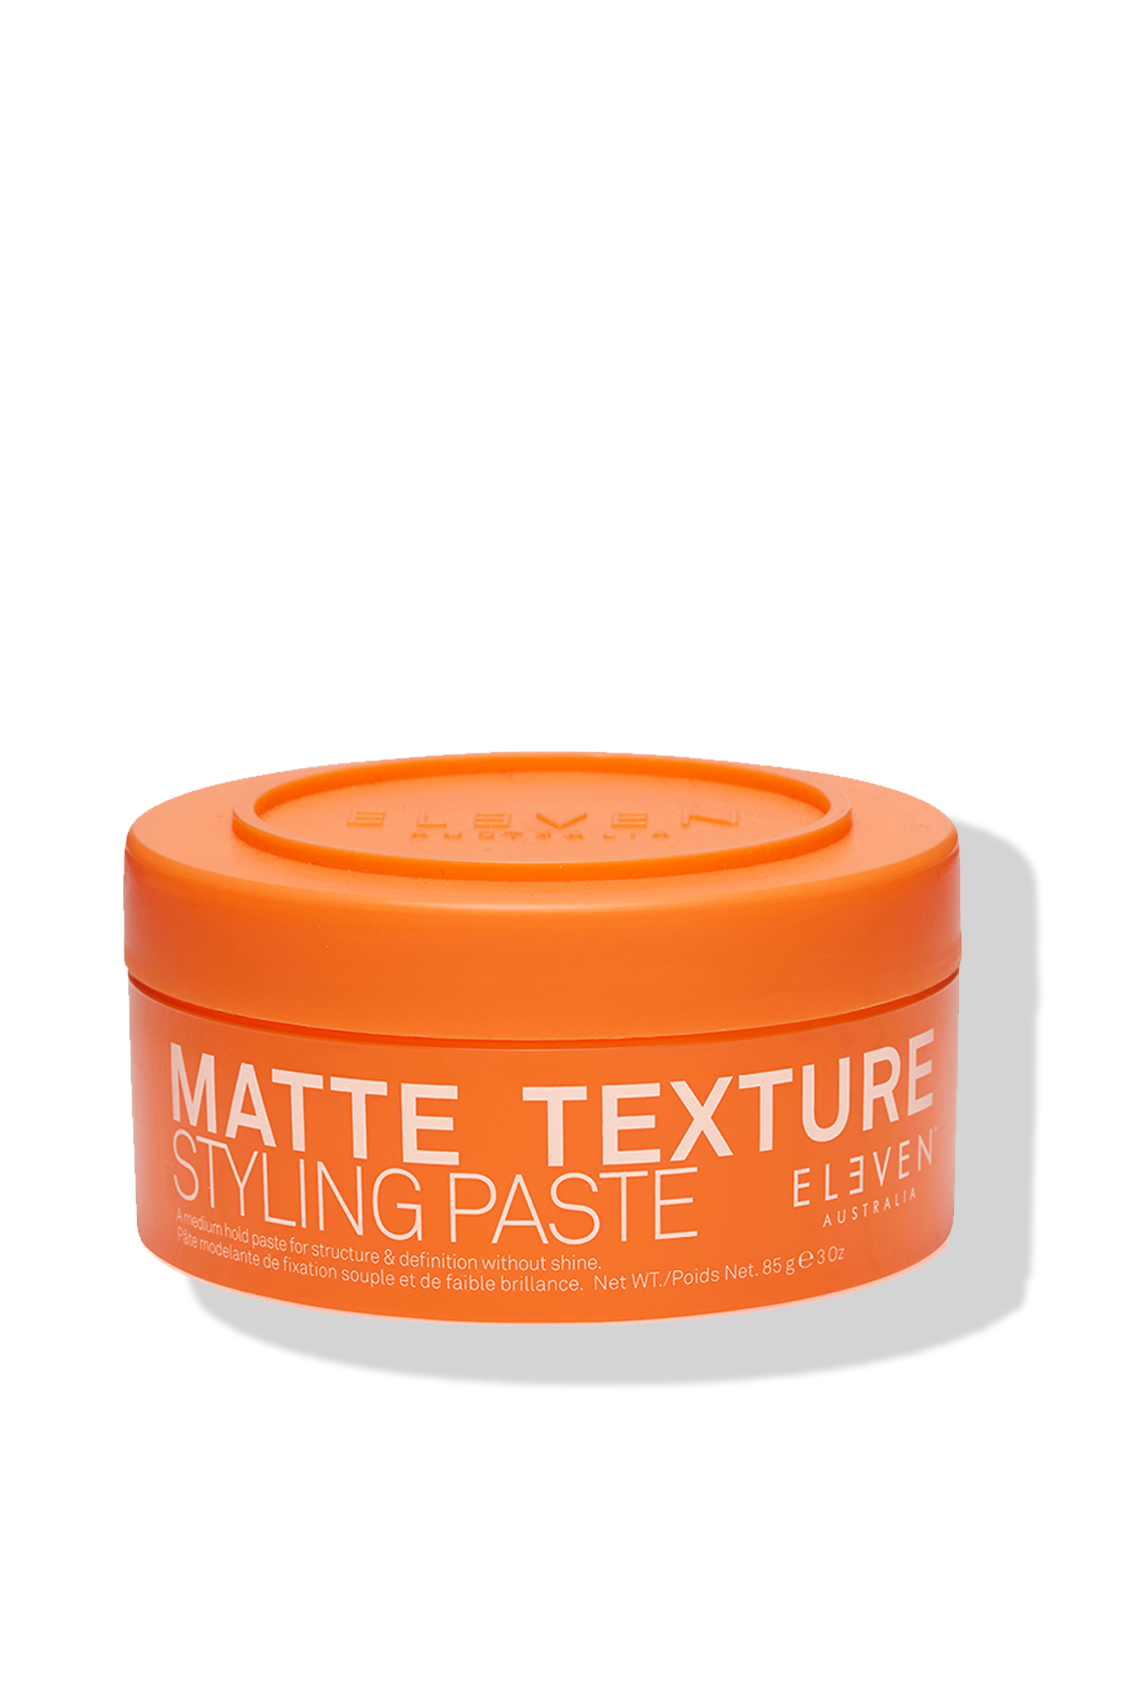 Eleven Australia matte texture styling paste